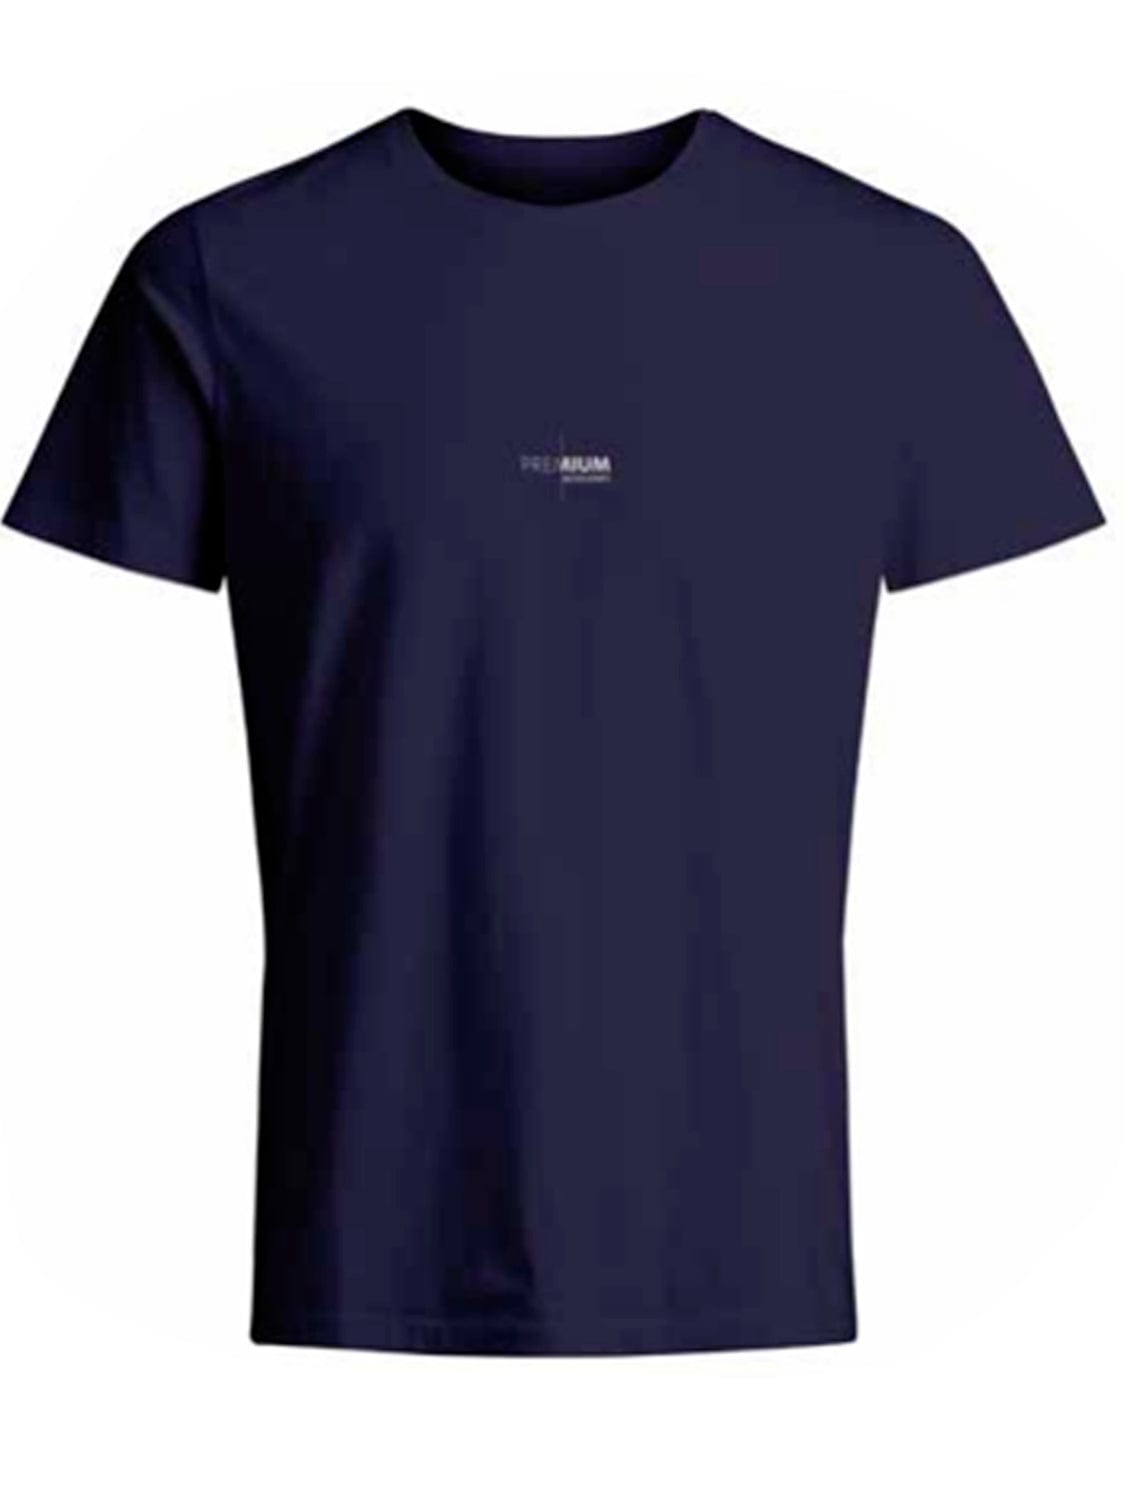 Camiseta de manga corta azul oscuro - JPRBLACHARLIE